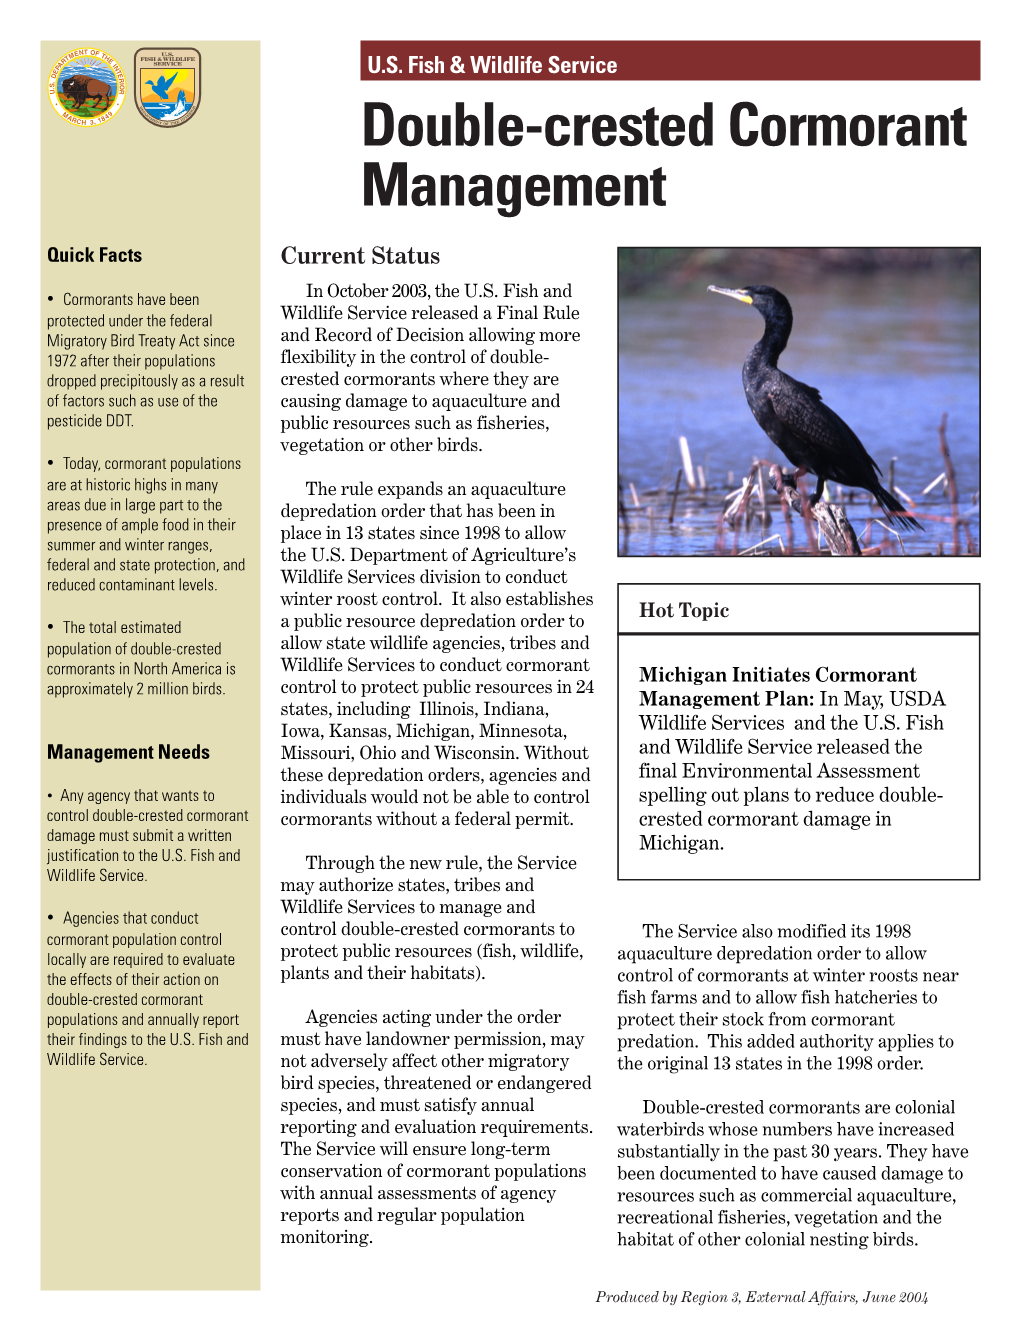 Double-Crested Cormorant Management